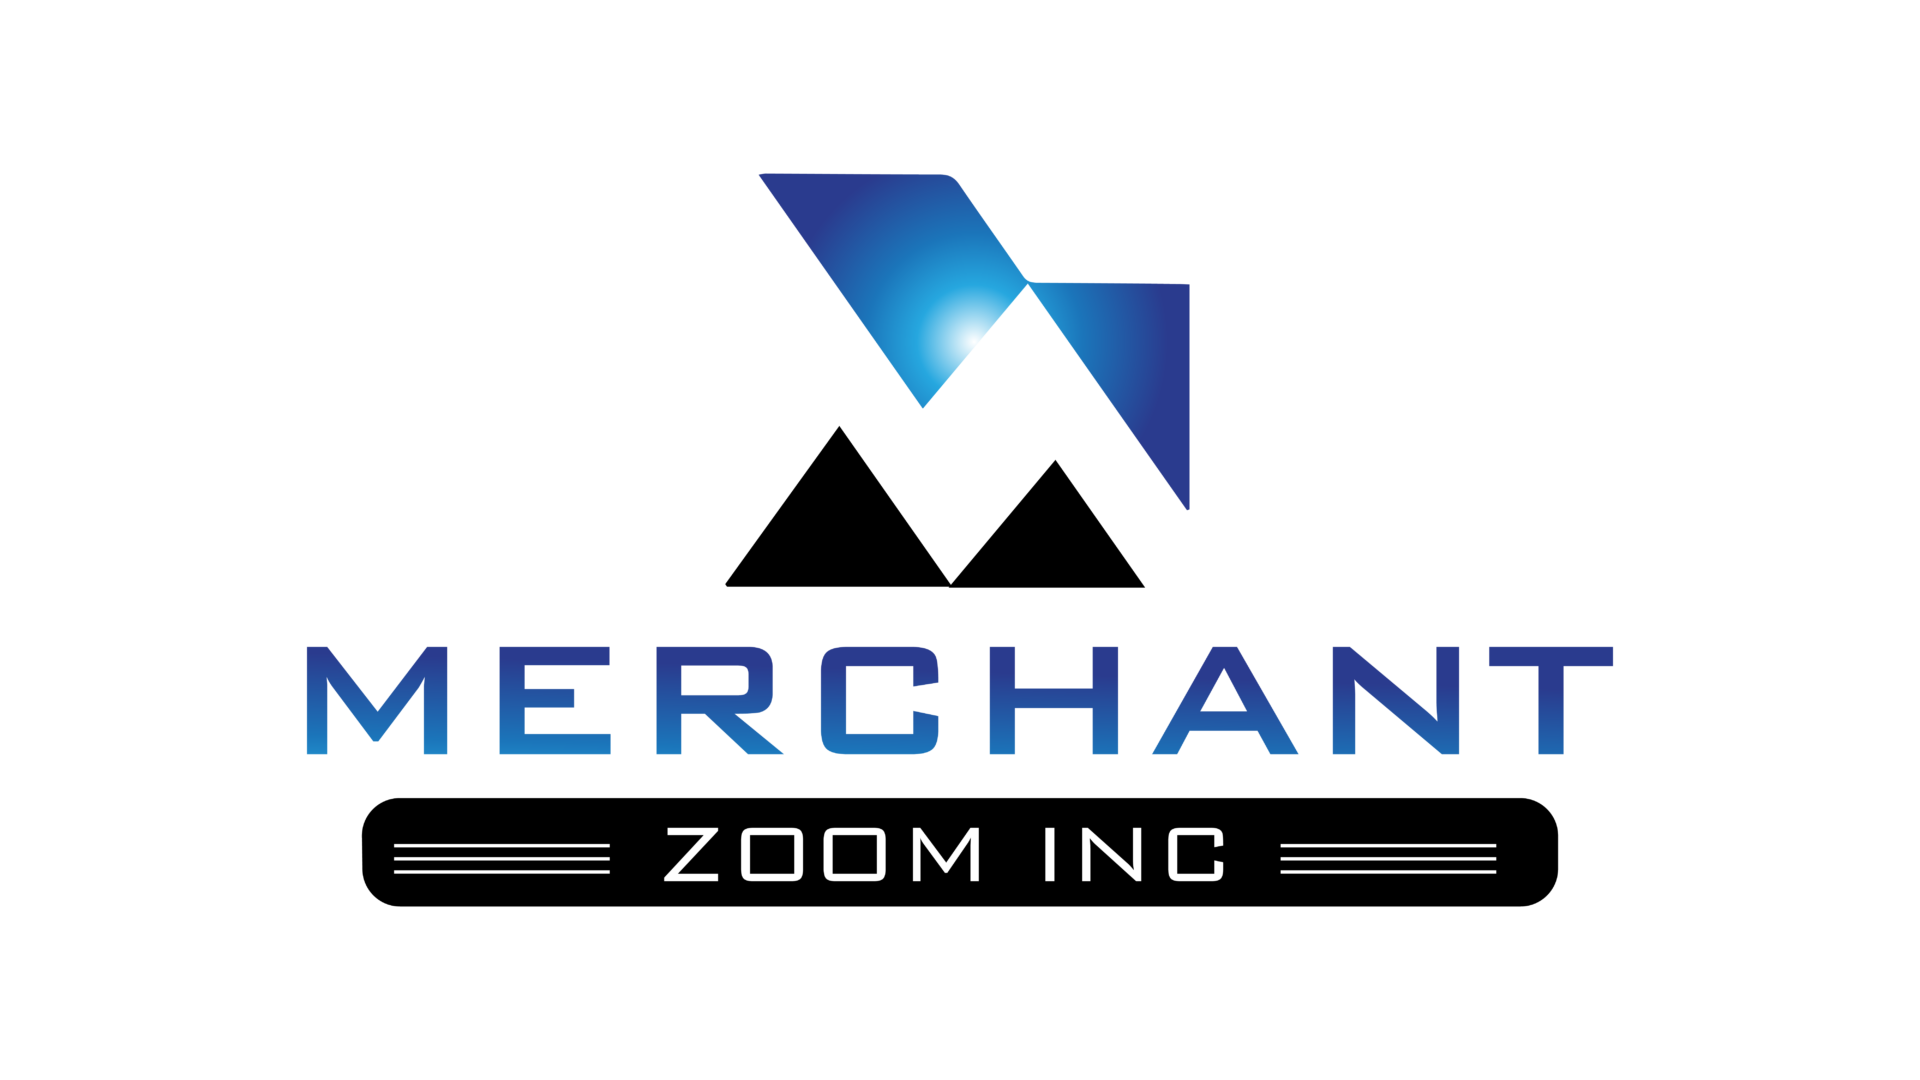 A logo of merchant zoom inc.